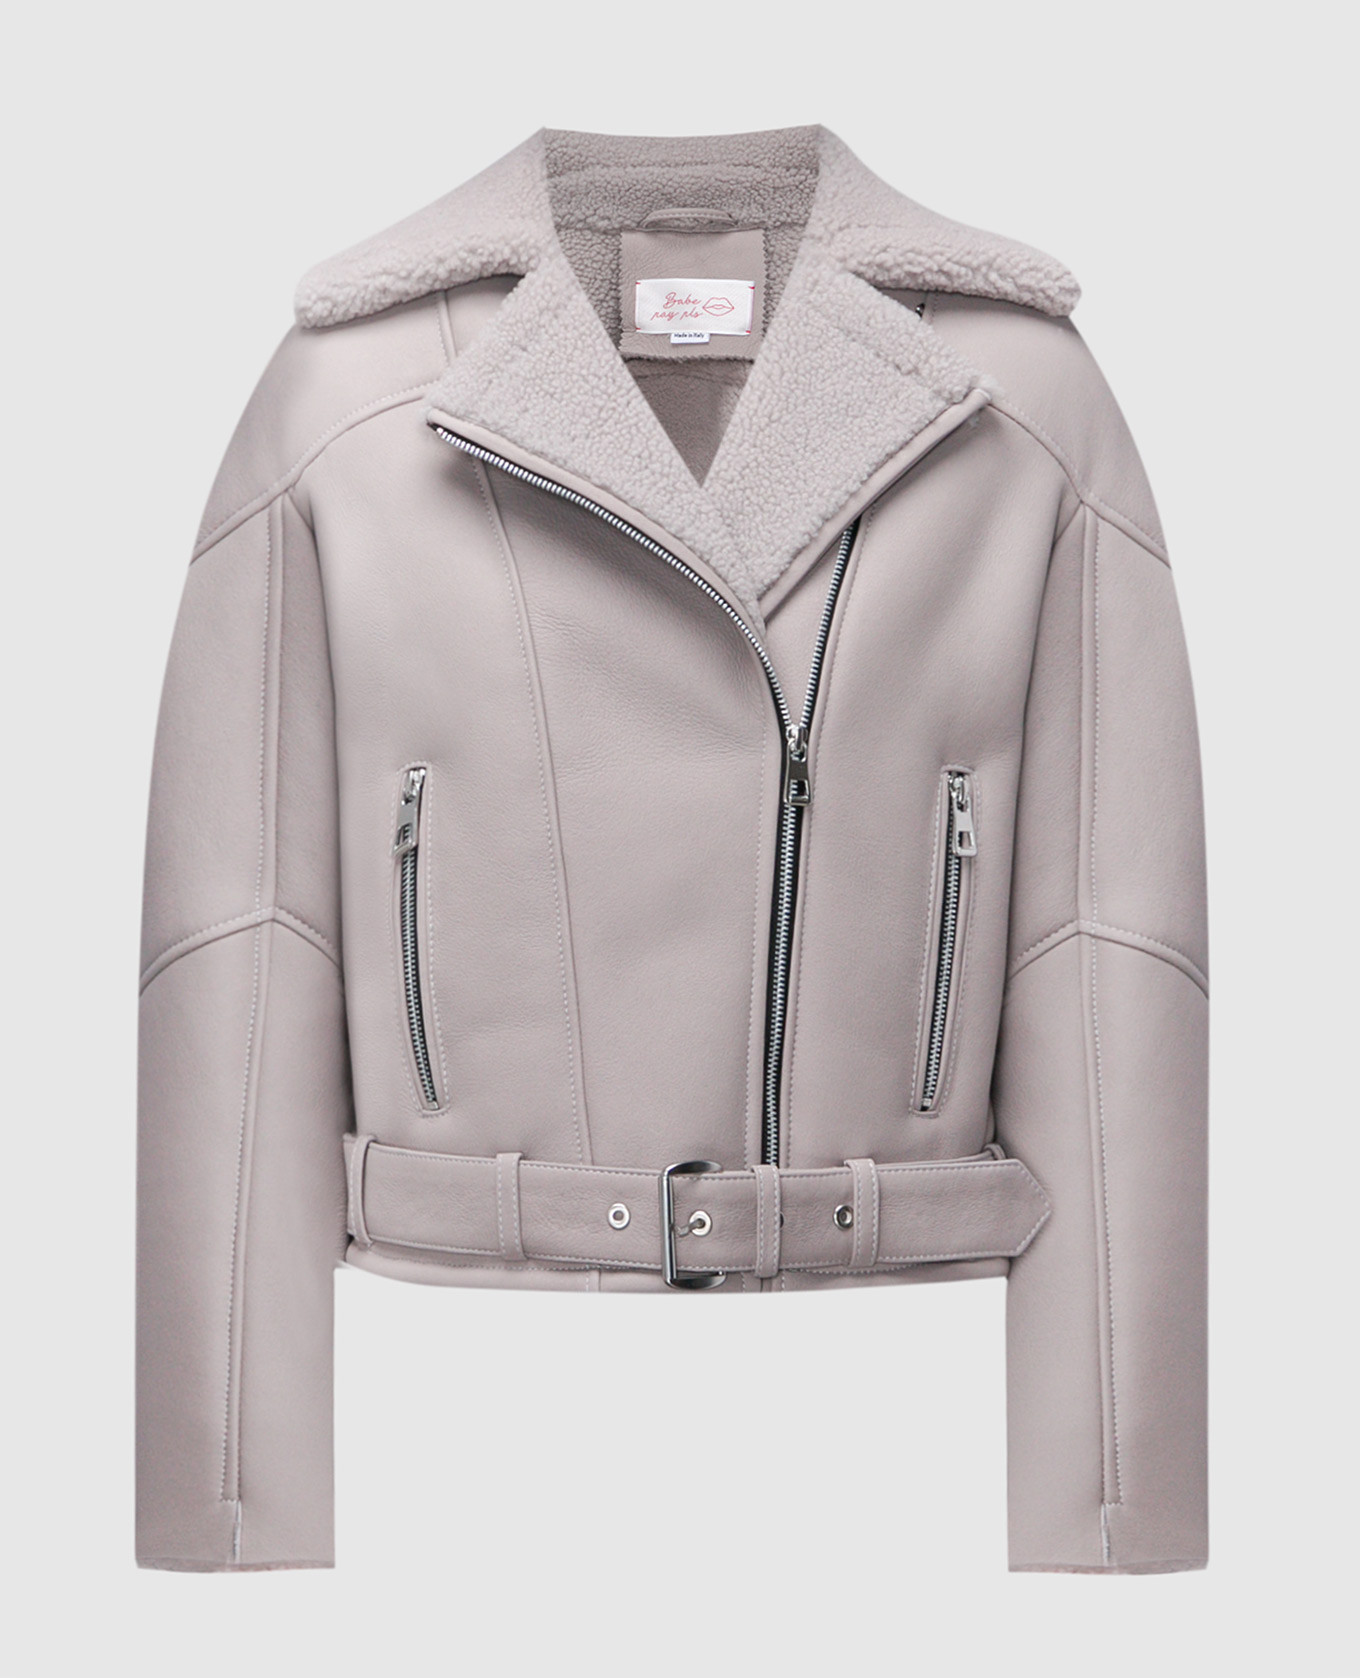 Gray short sheepskin coat in the style of a sheepskin coat